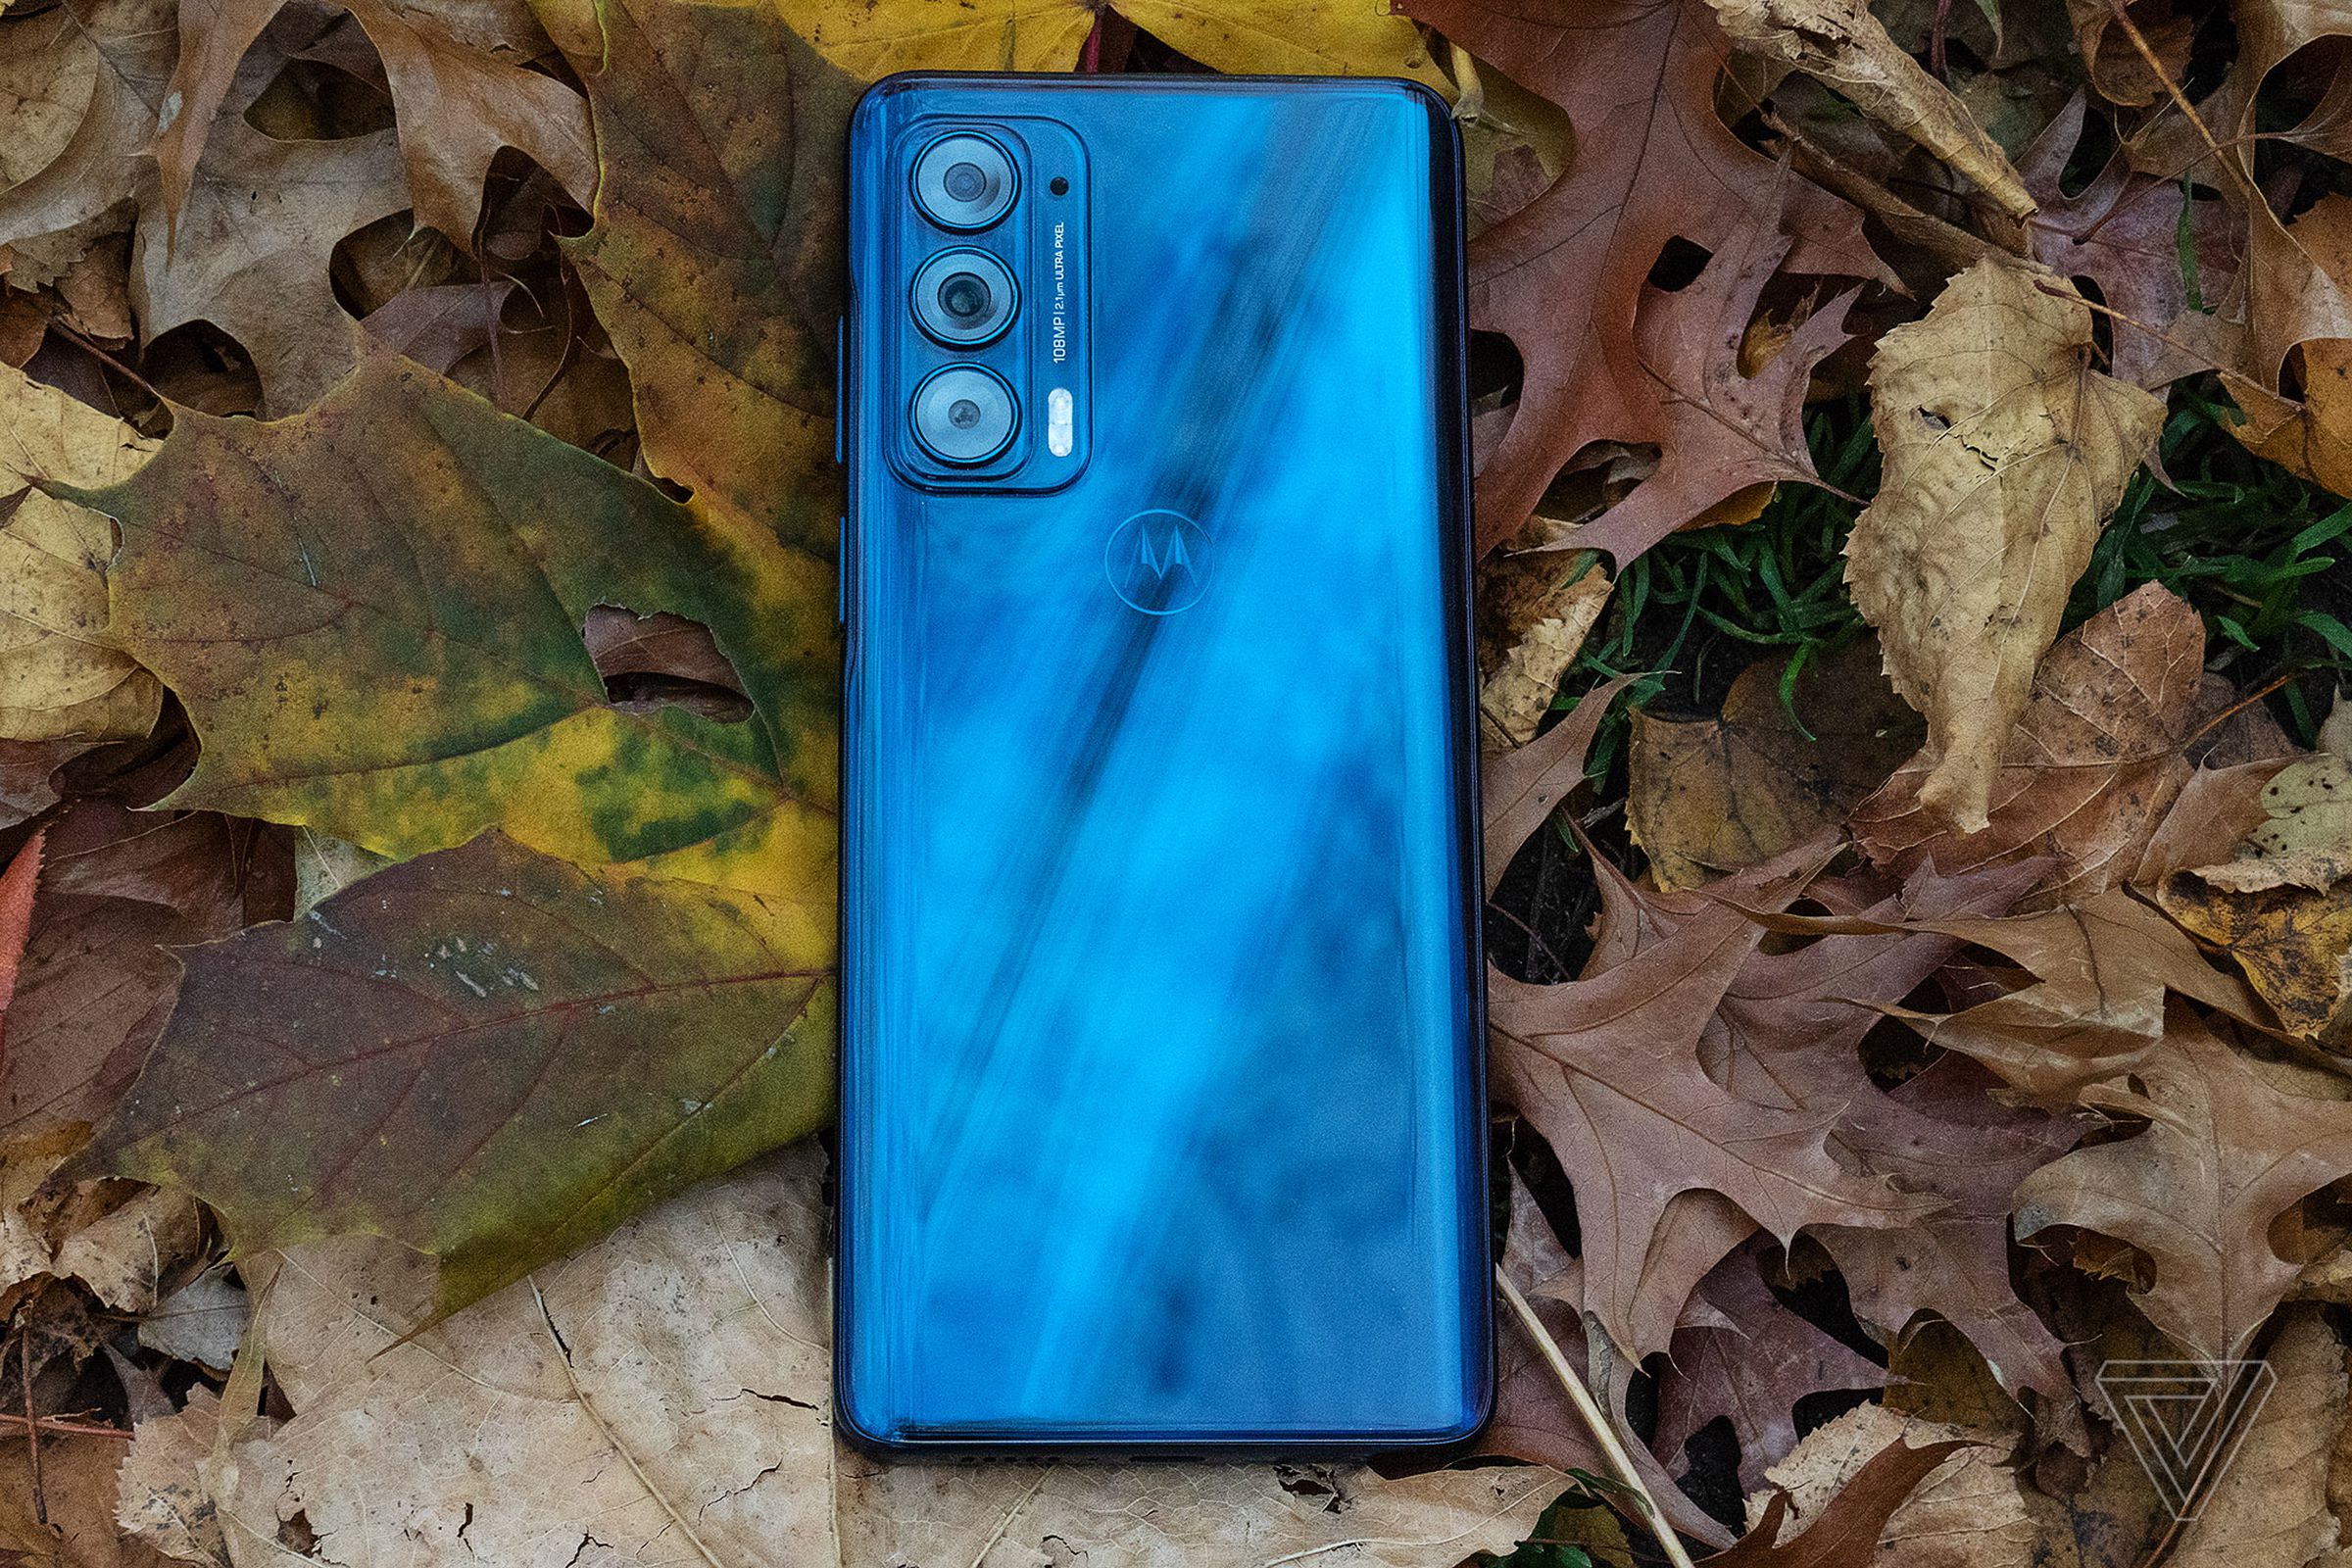 Motorola Moto Edge 5G UW (2021) in Nebula Blue.